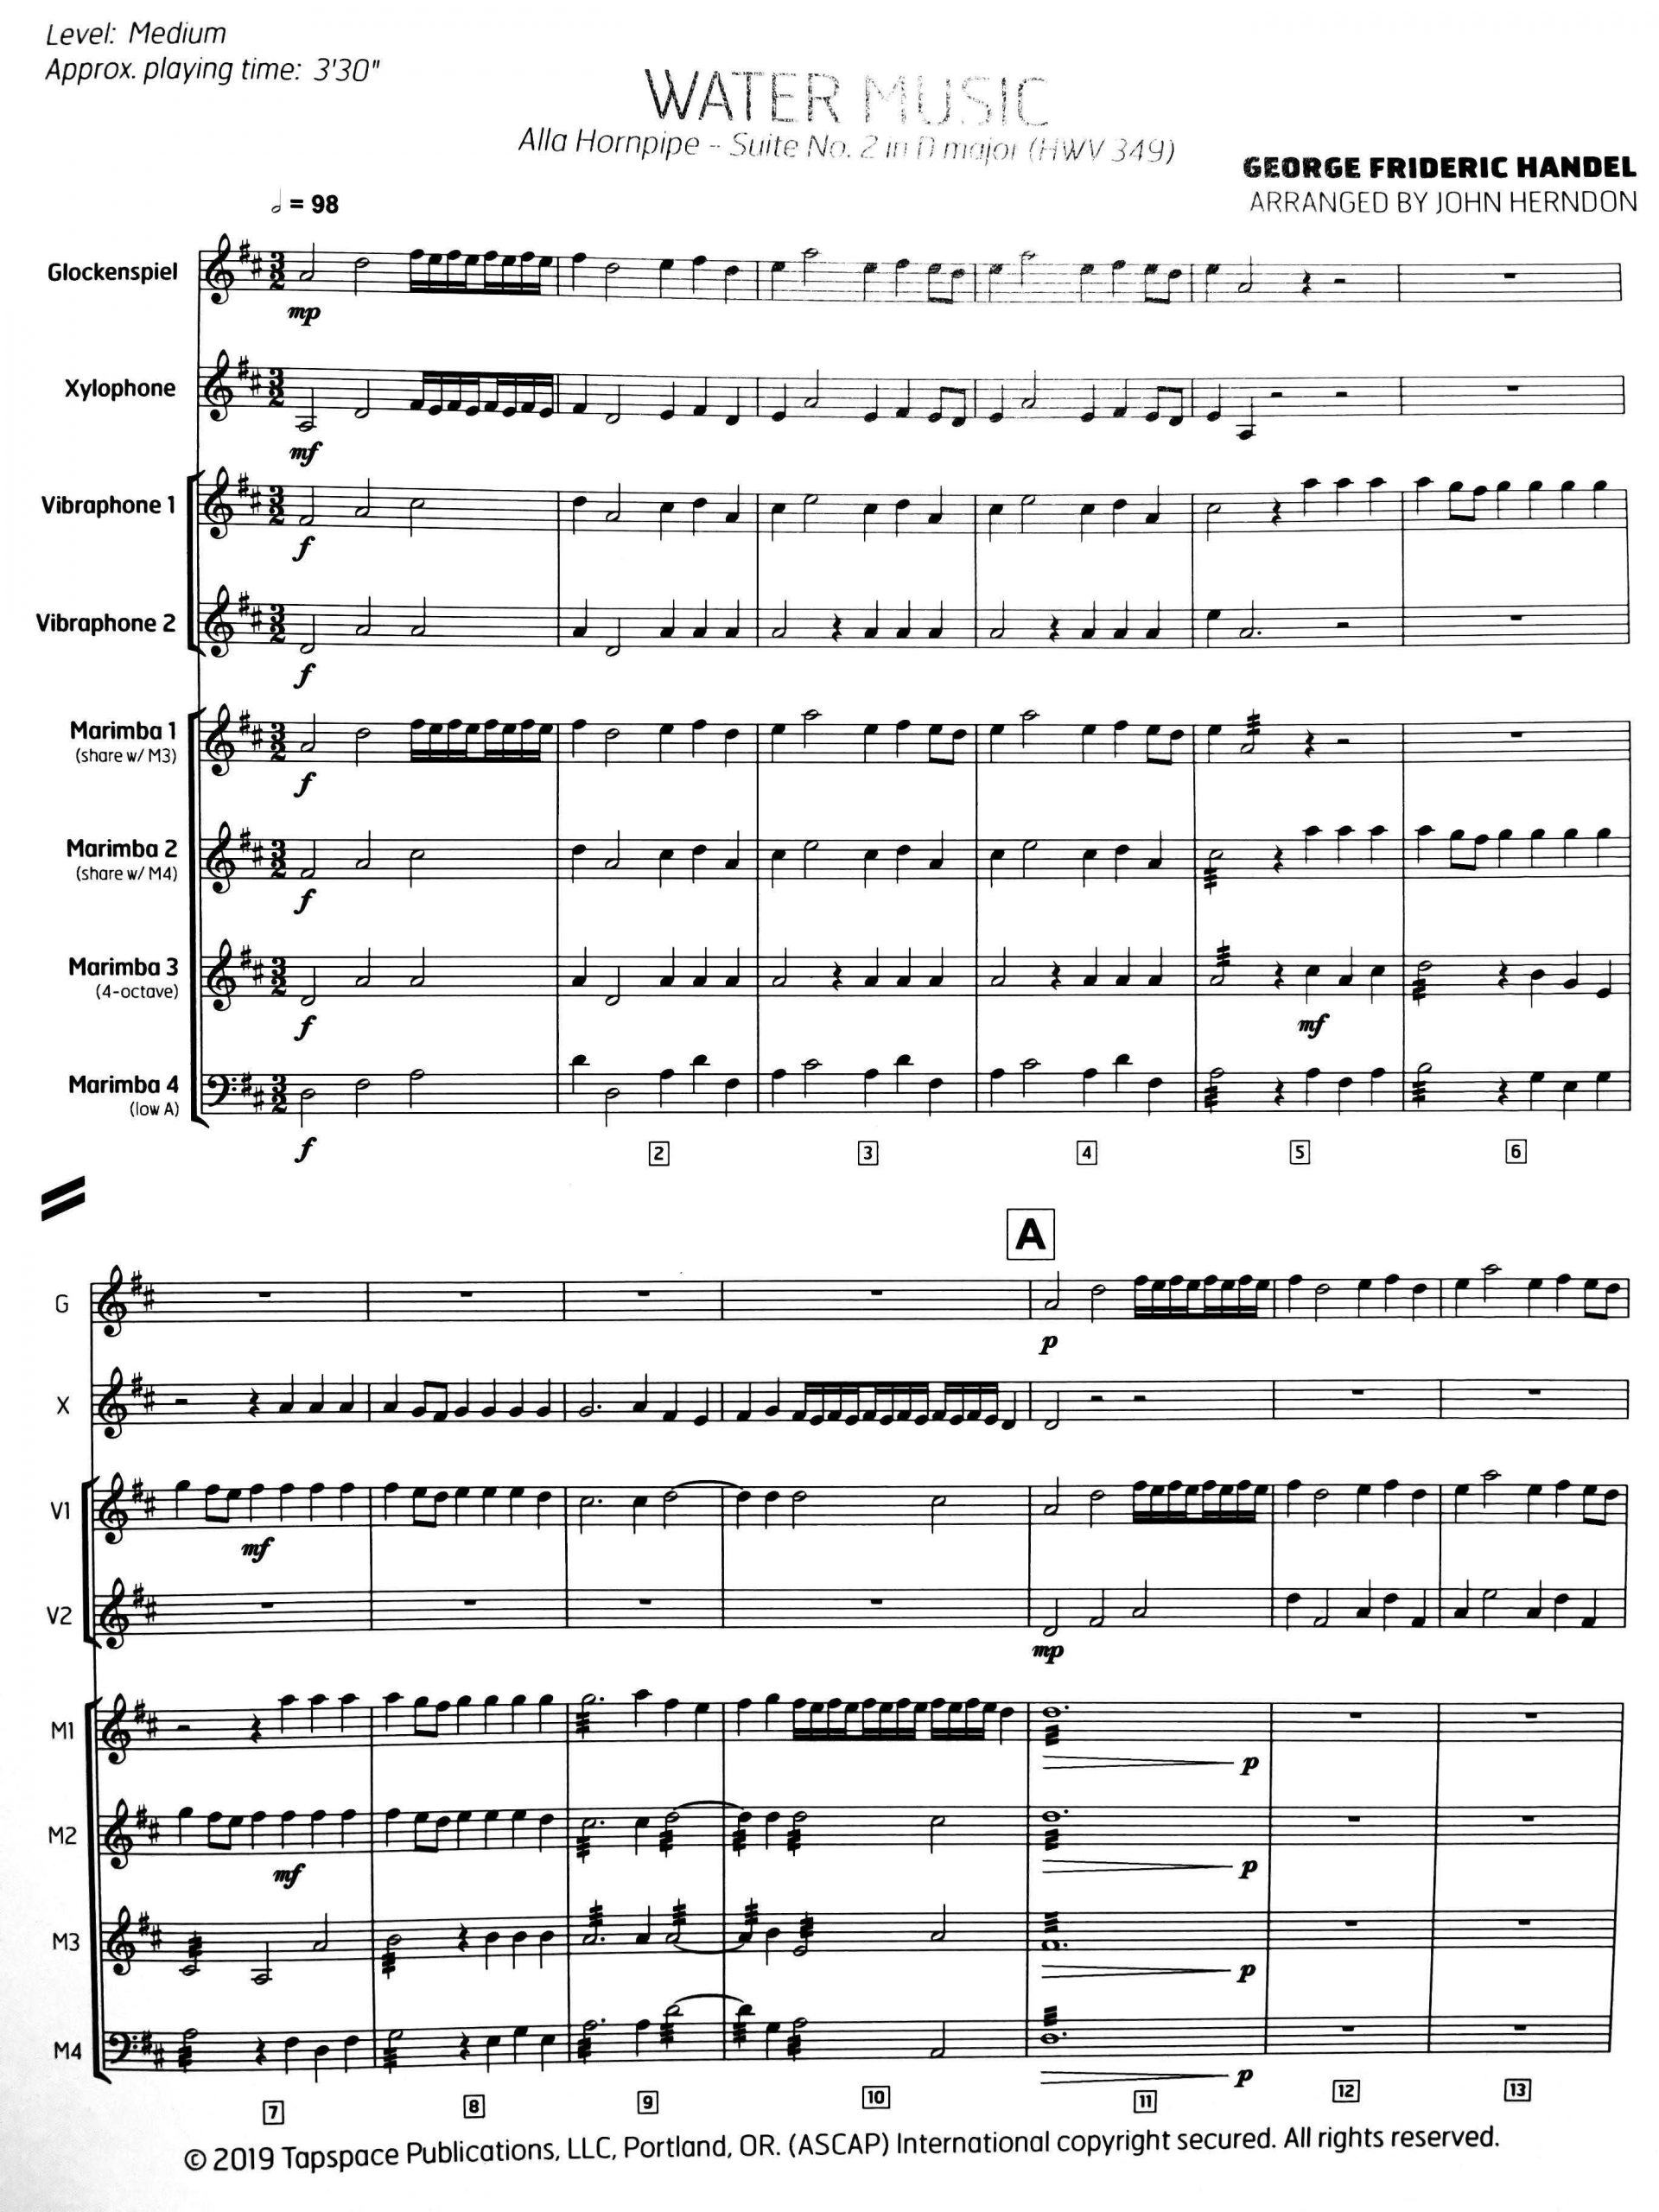 Water Music by Handel arr. John Herndon